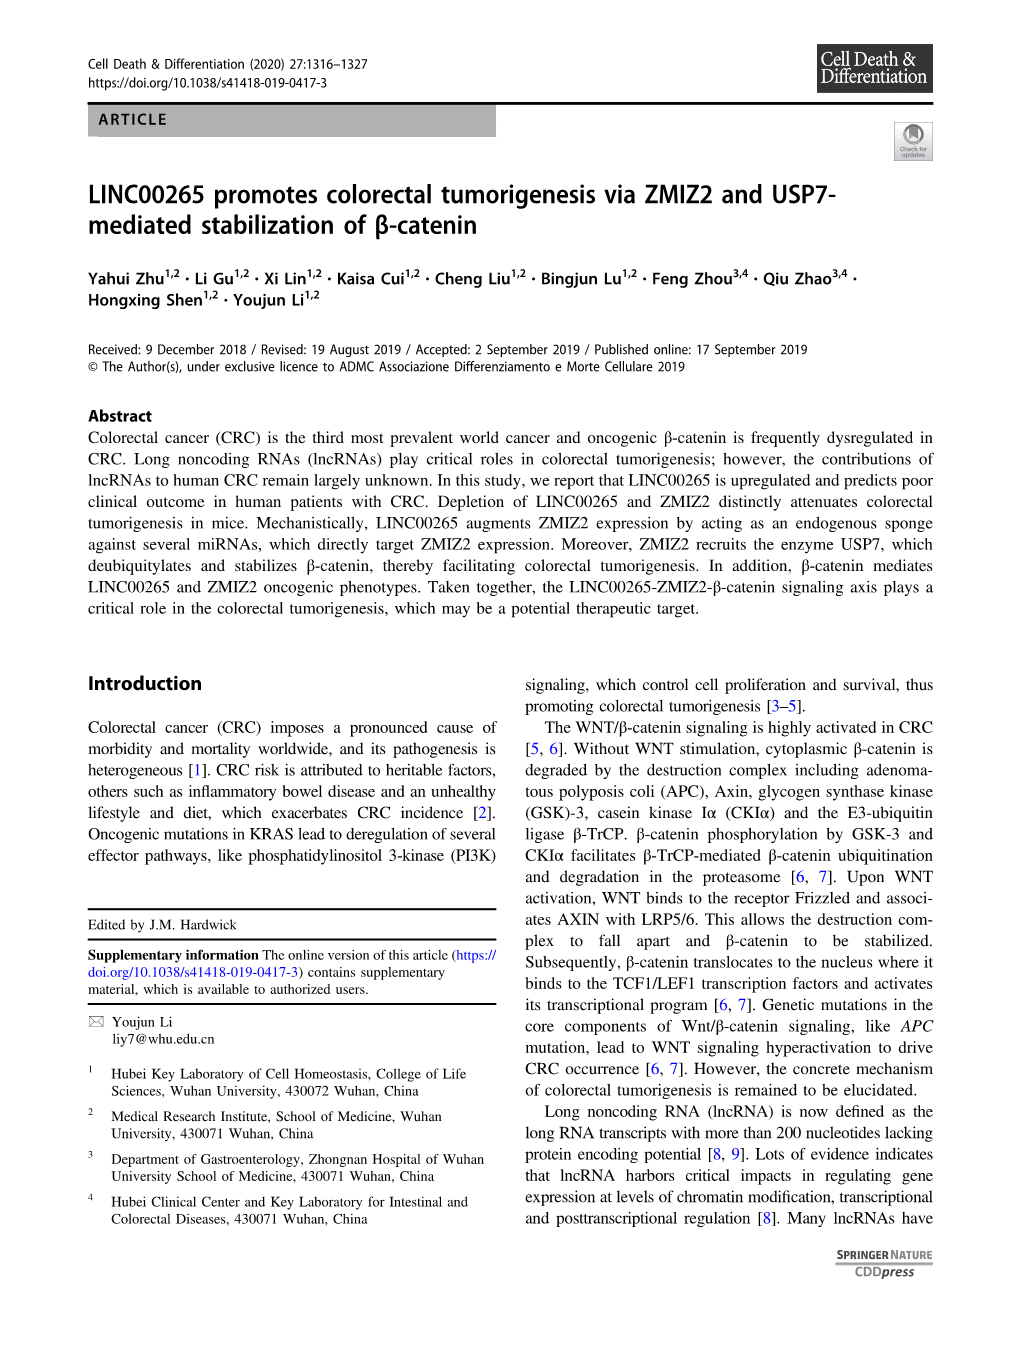 LINC00265 Promotes Colorectal Tumorigenesis Via ZMIZ2 and USP7-Mediated Stabilization of Î²-Catenin